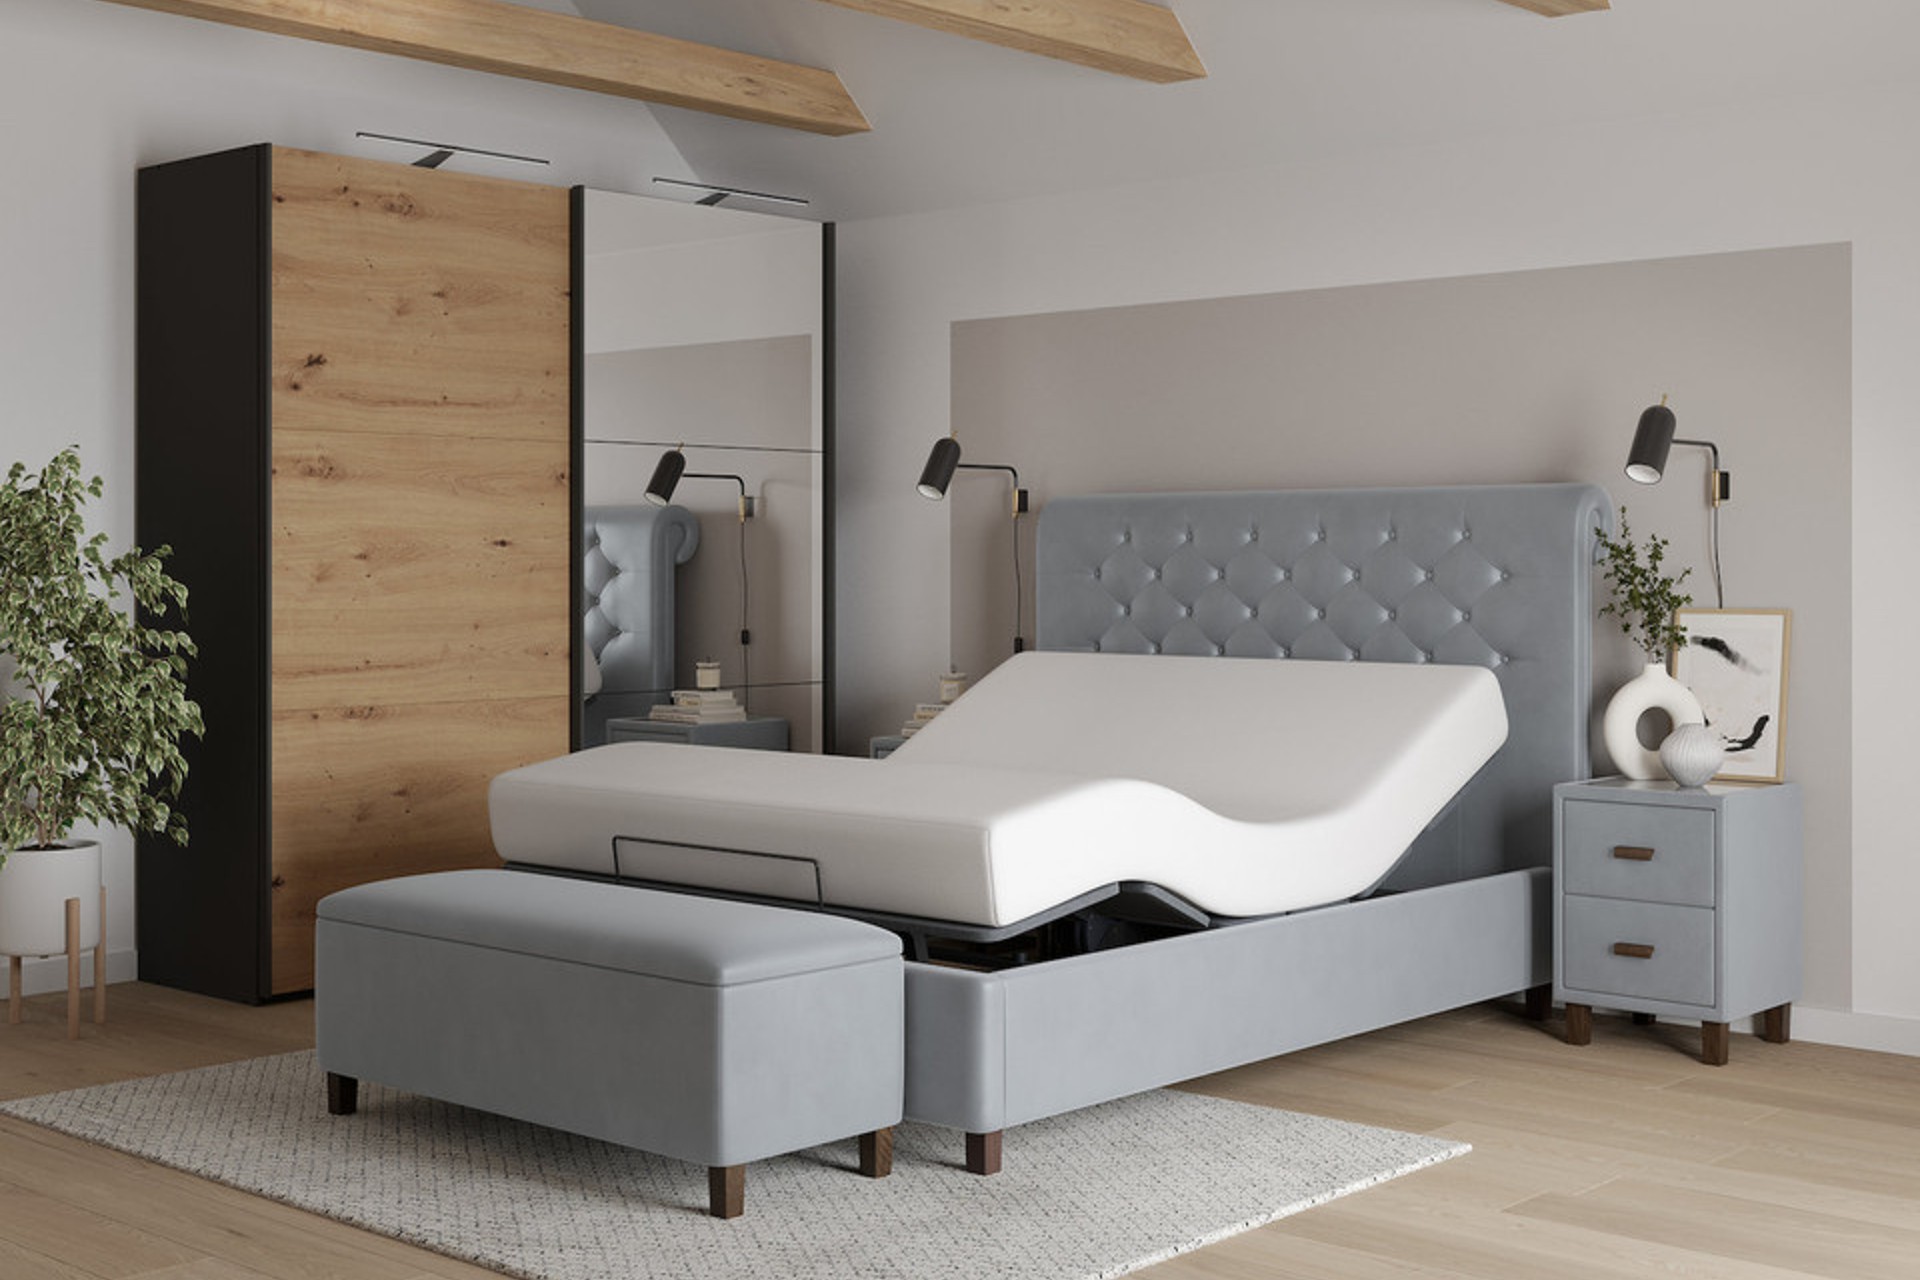 Snooze nightfall adjustable bed frame in Topaz grey